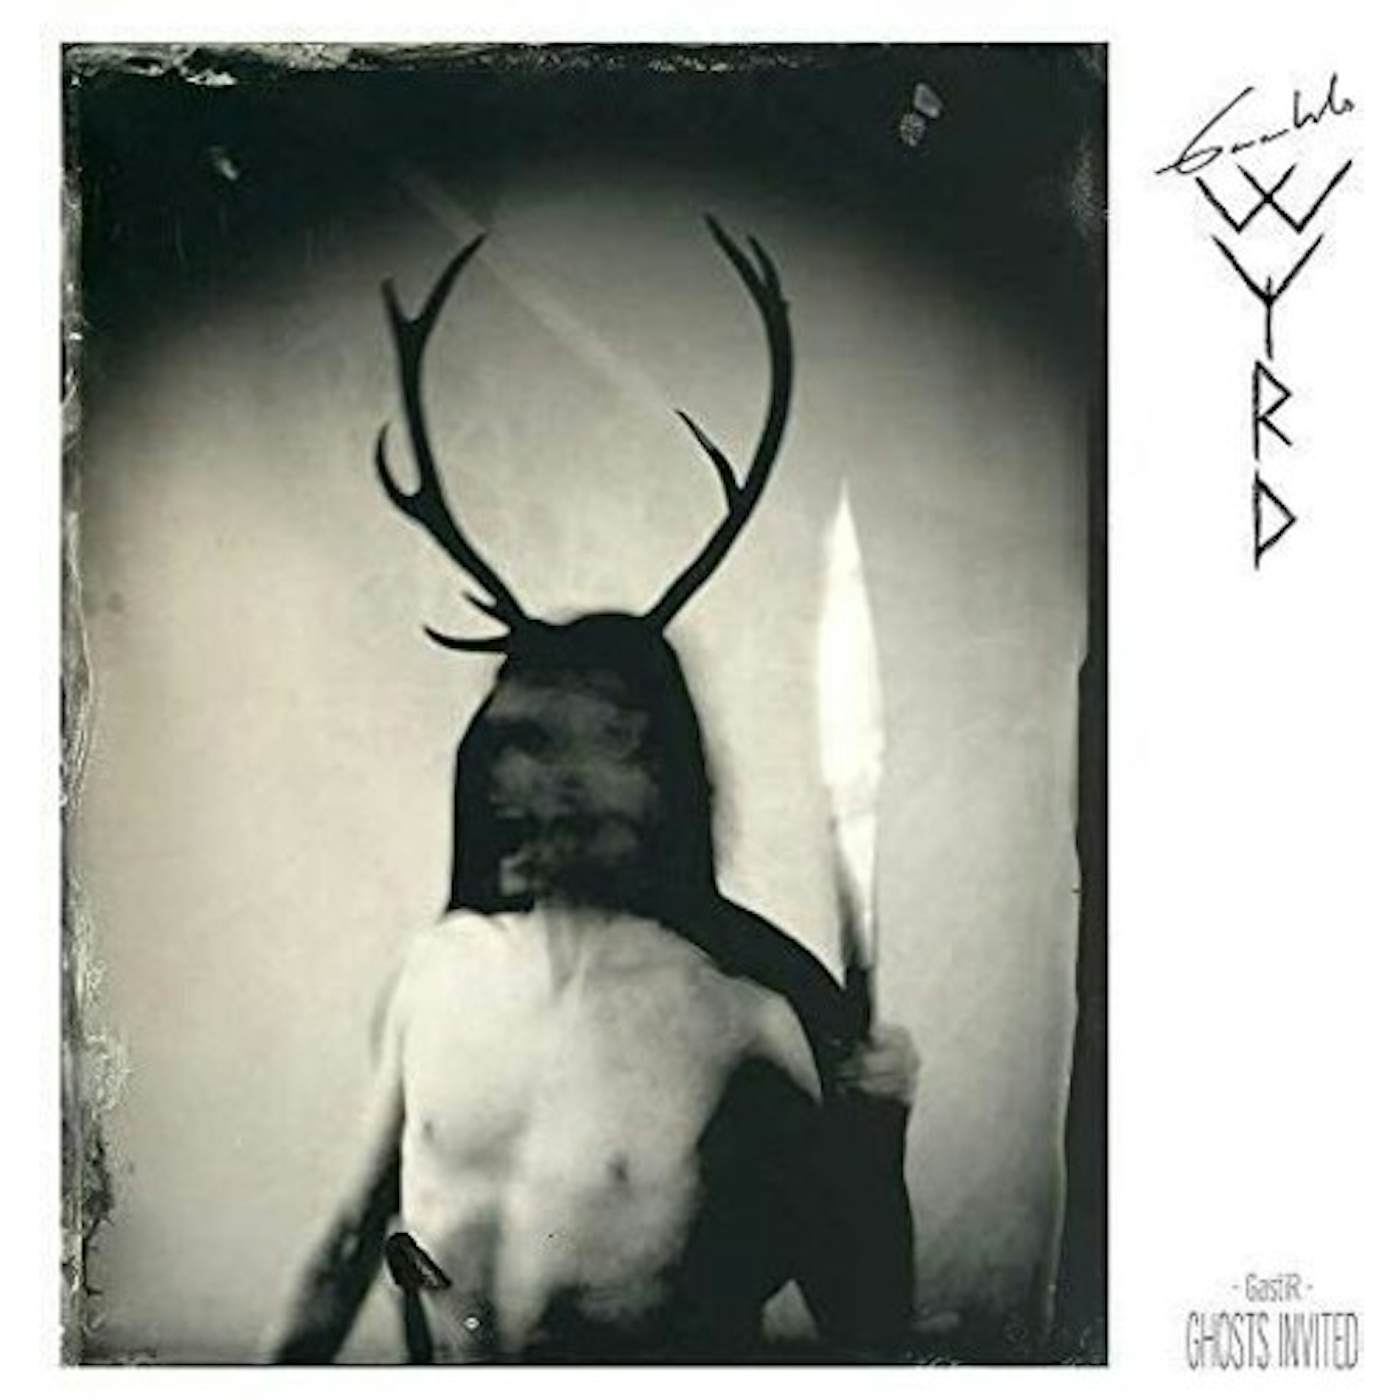 Gaahls WYRD Gastir - Ghosts Invited Vinyl Record